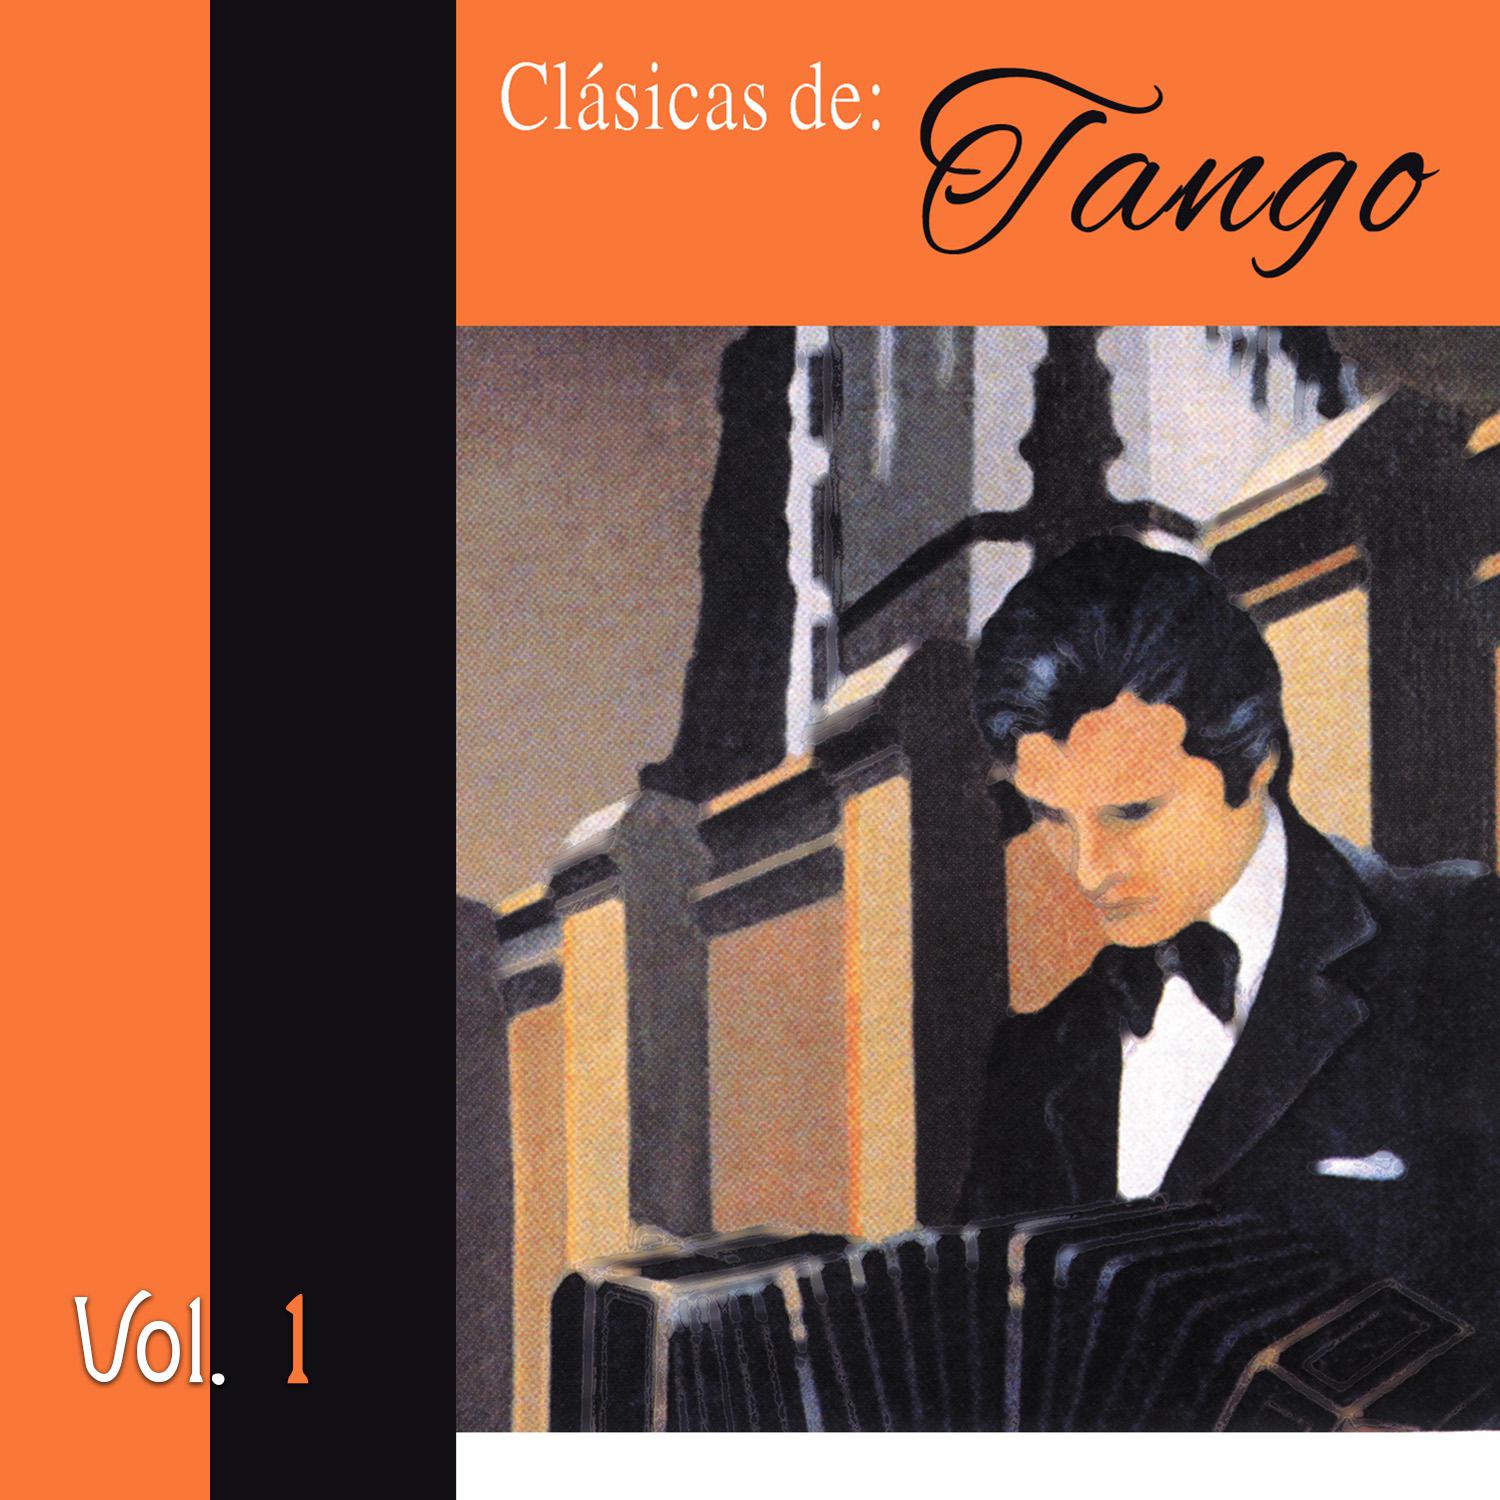 Cla sicas de Tango Vol. 1